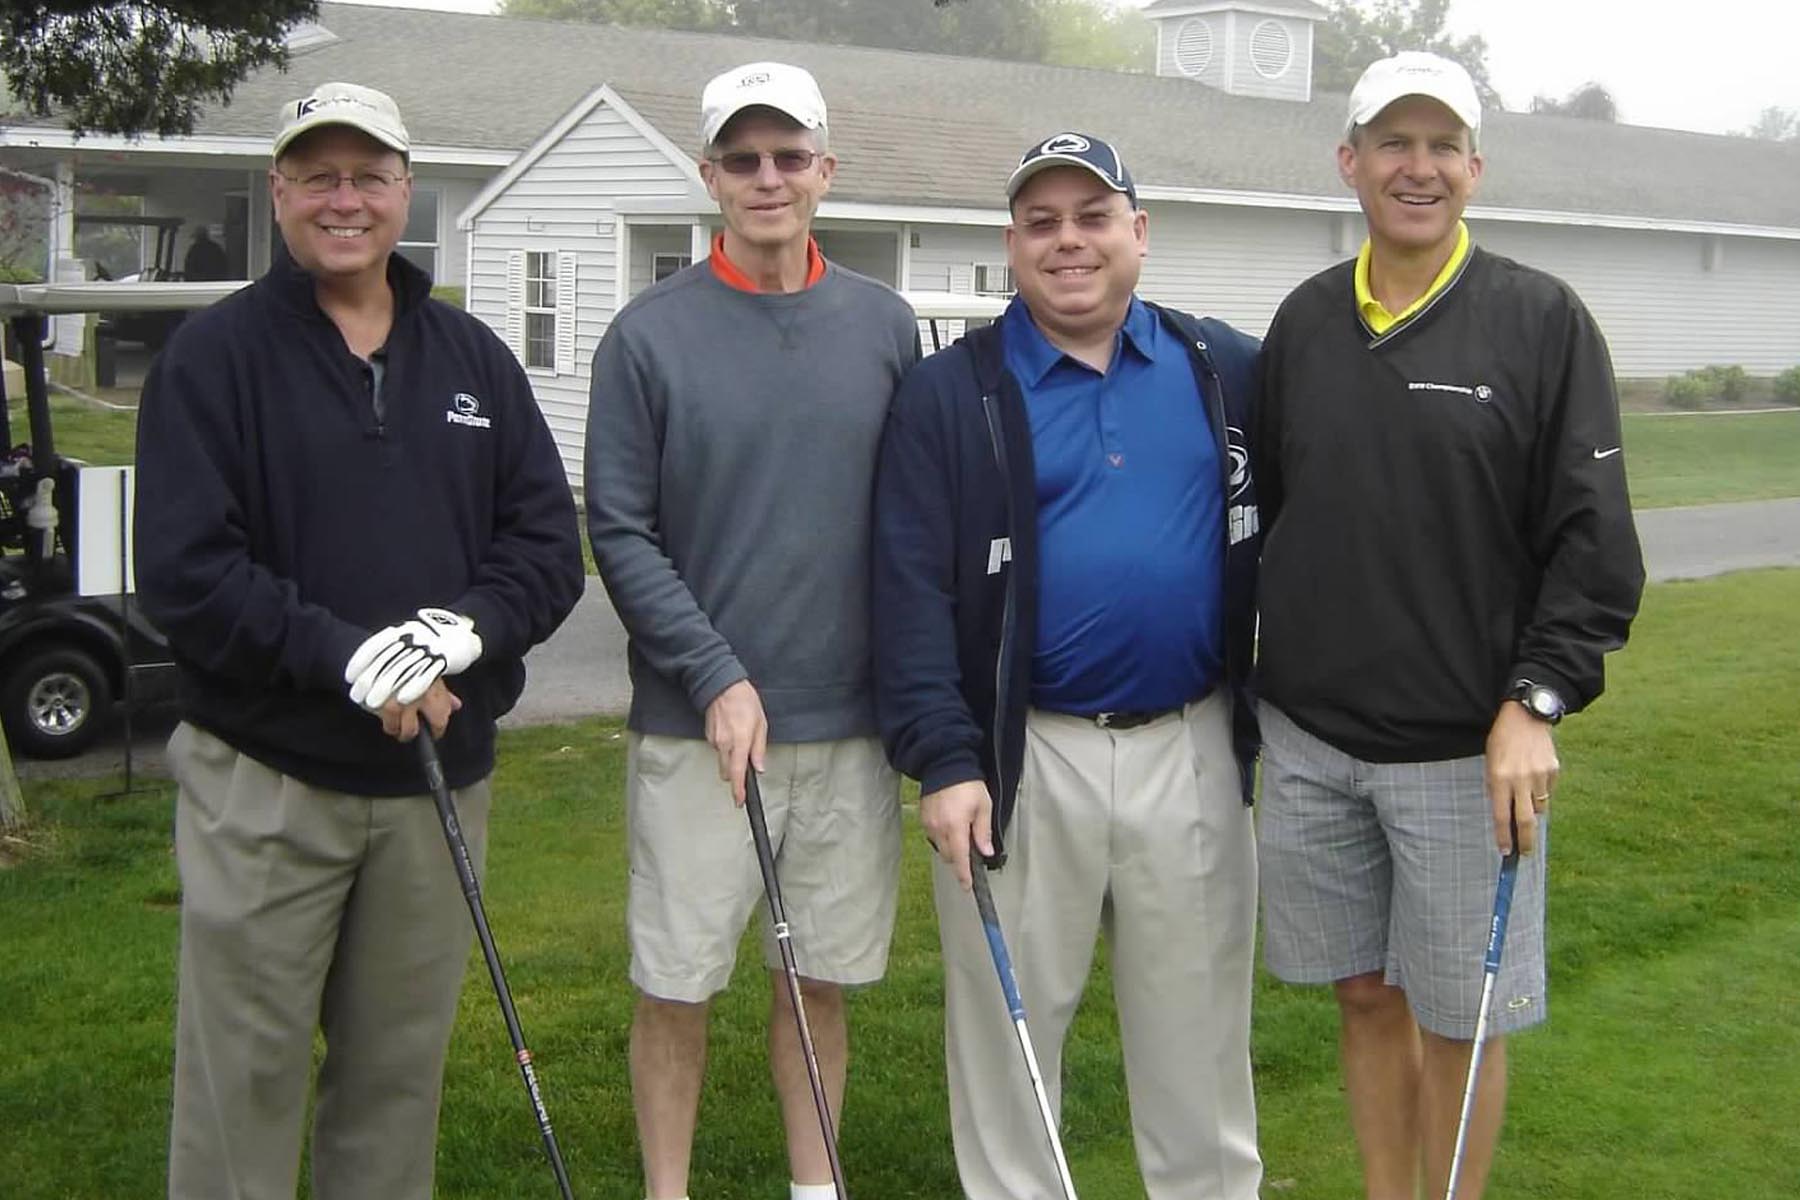  2012 Theta Chi Golf Open
L to R: Rod Dare, Dave Matthews, Alan Vladmir, Bob Mausser 